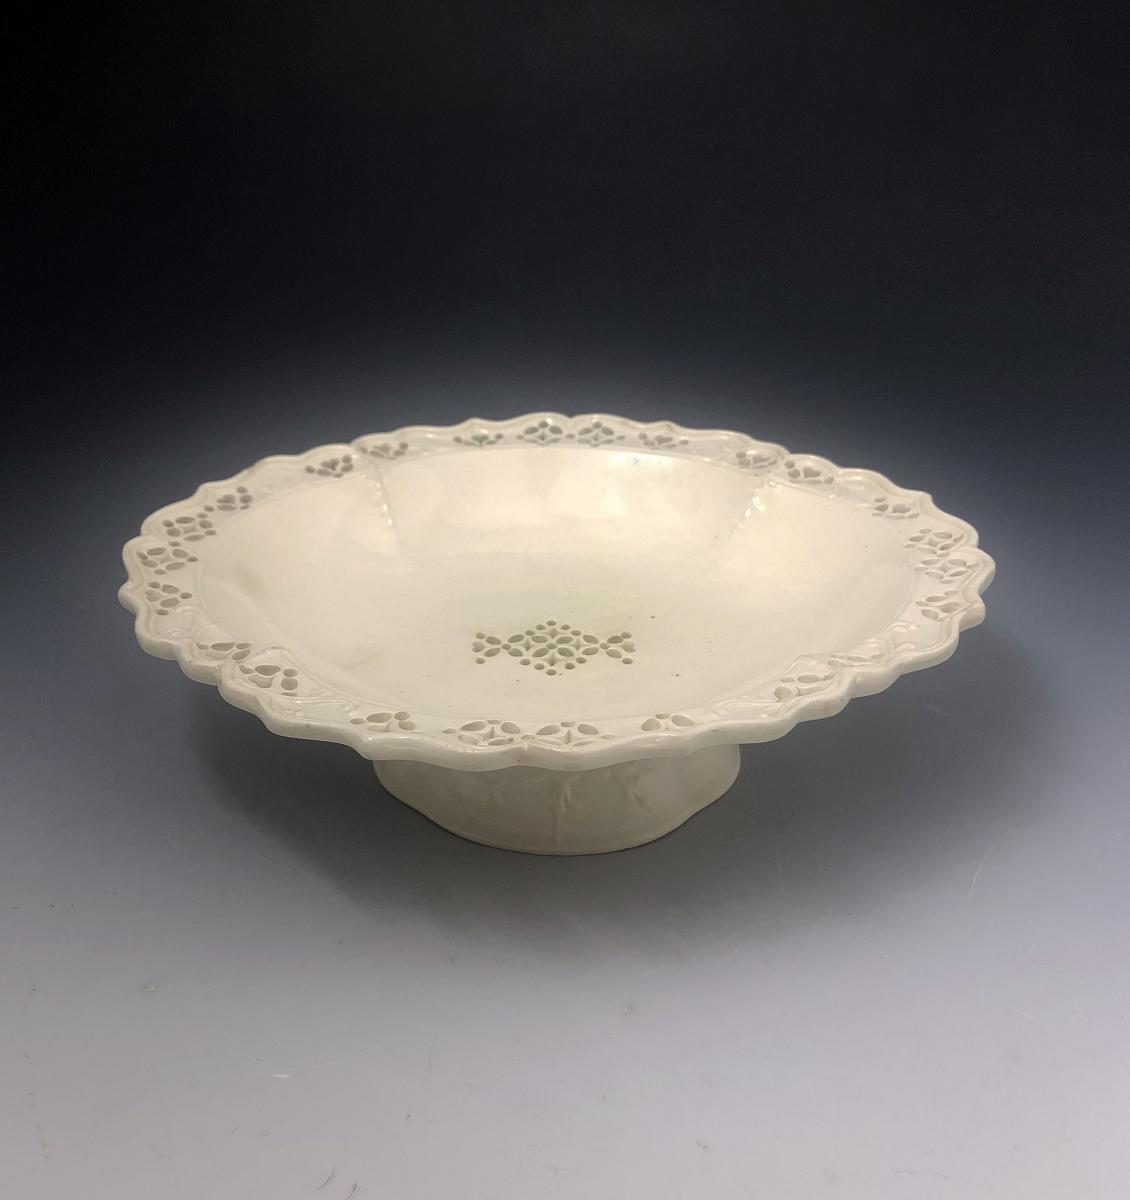 English antique creamware tazza reticulated decoration 18th century